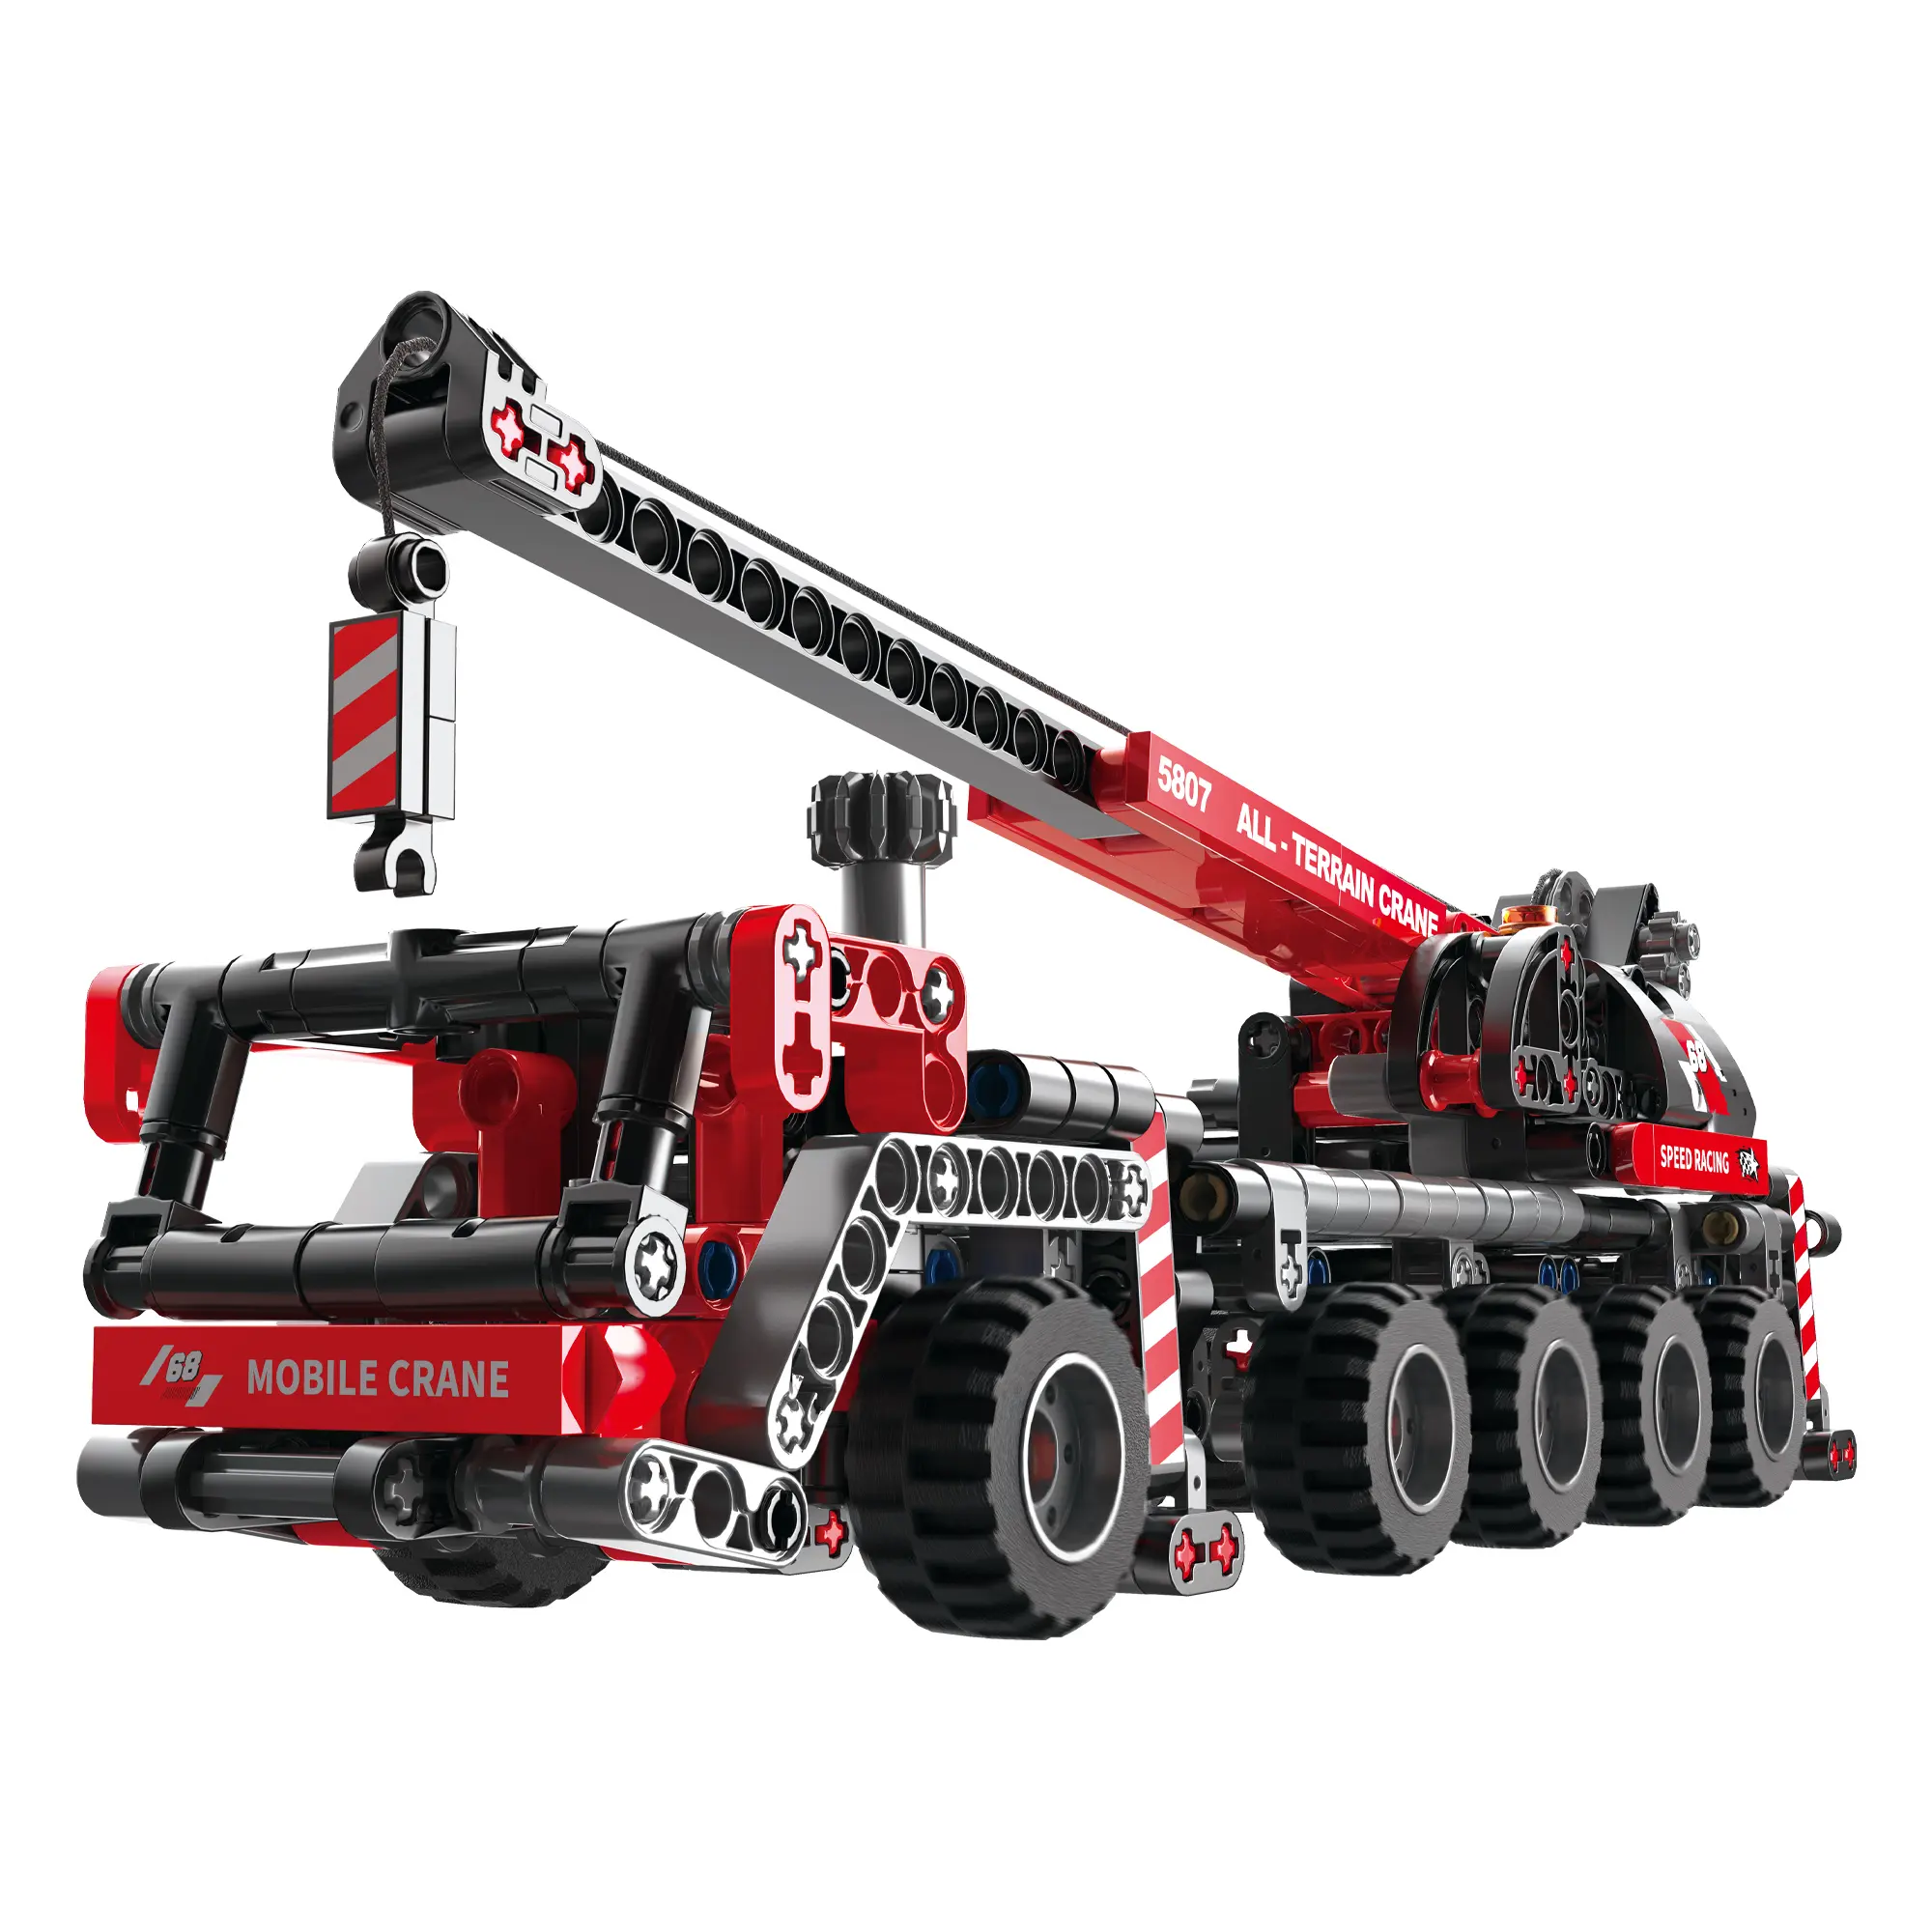 COGO 5807 Vehicles Building Block Heavy crane new toys Technology Bricks puzzles Model for blocks model building toys